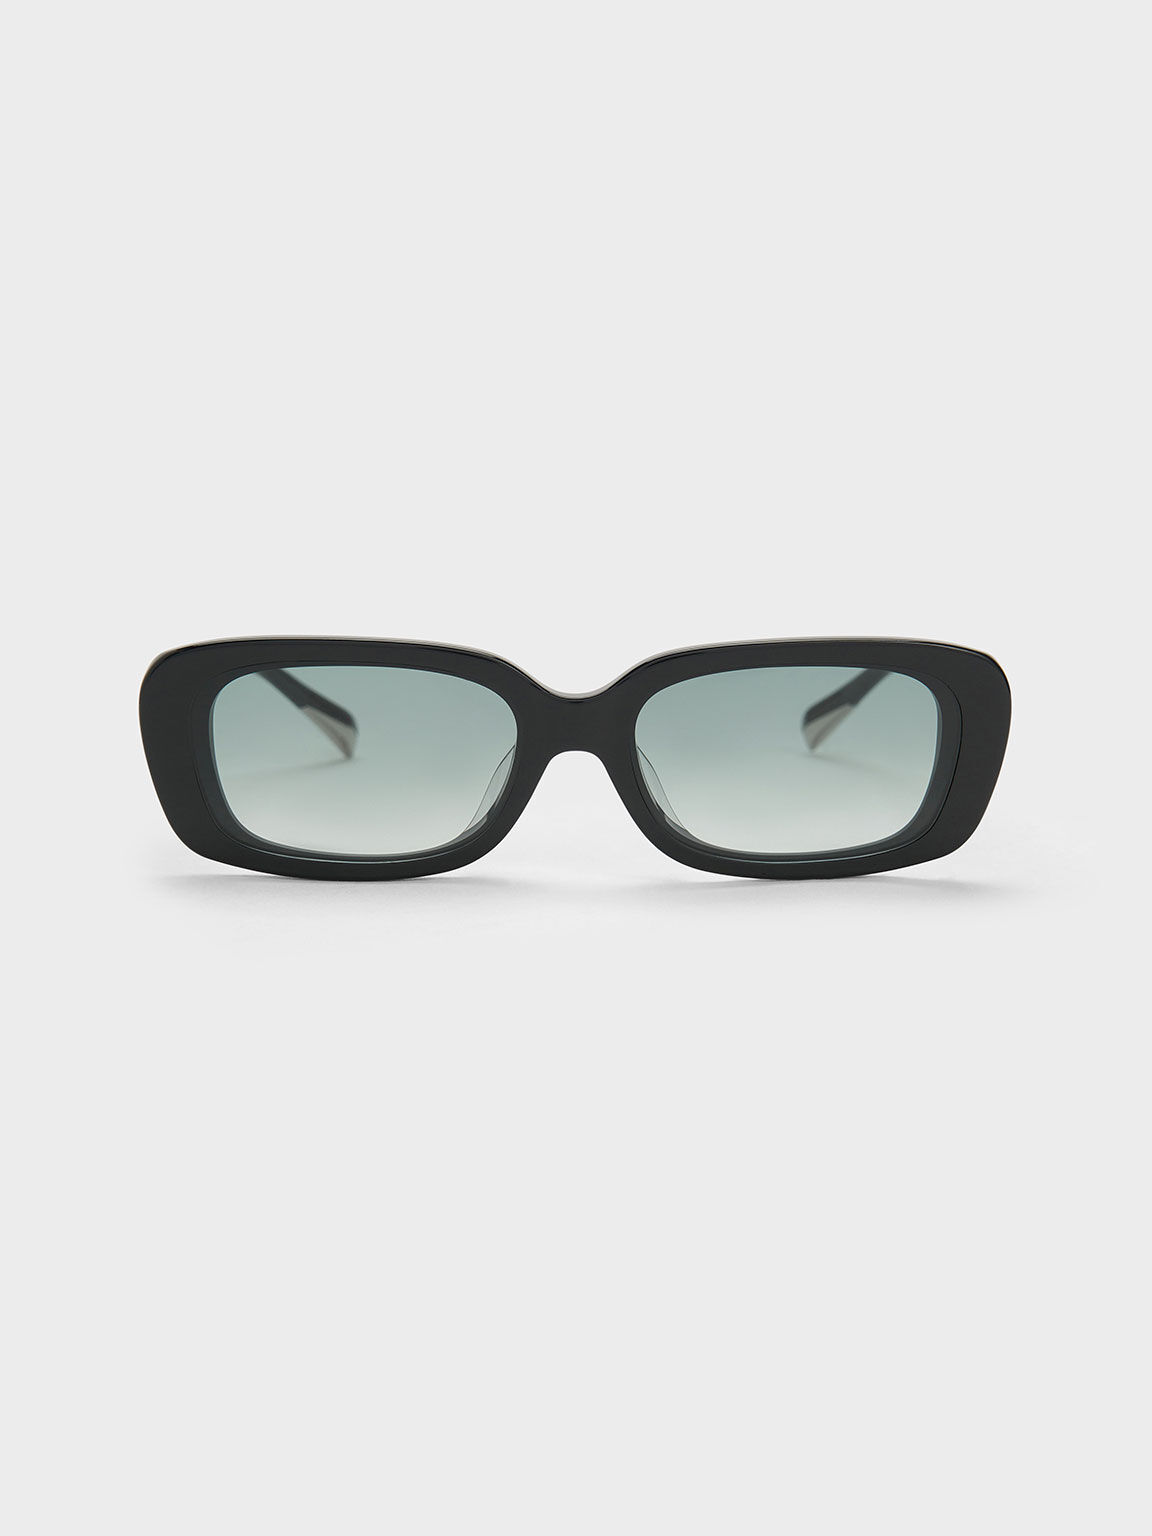 Buy 2021 Retro Vintage Rectangle Sunglasses UK Online in India - Etsy